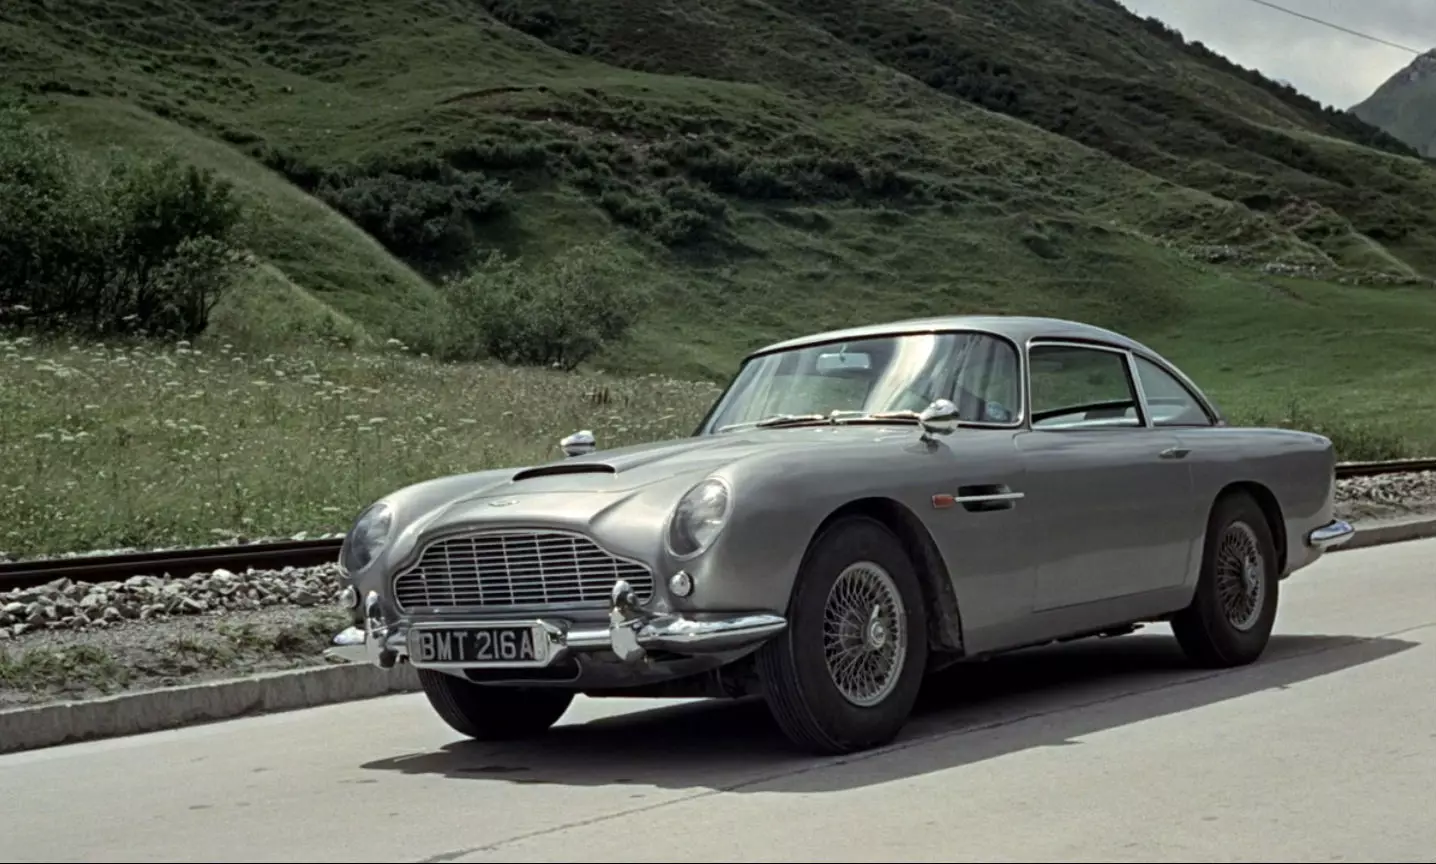 I-Aston Martin DB5 1964 Goldfinger